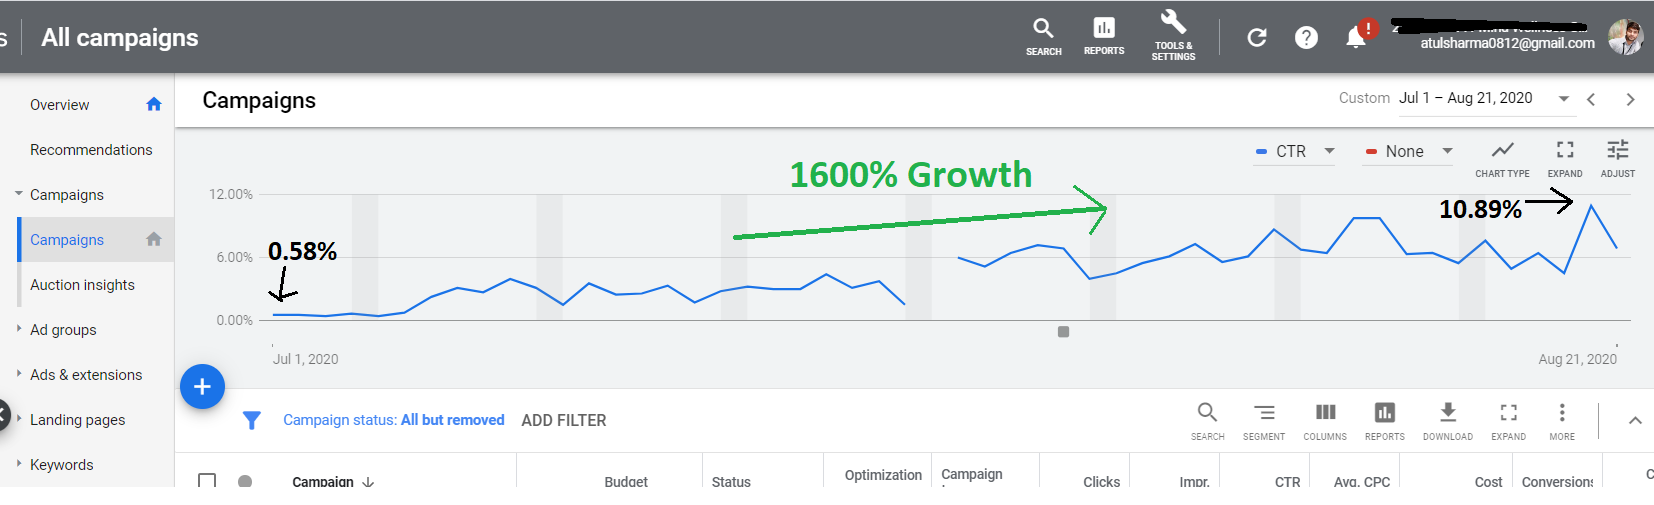 1600% CTR Growth on Google Ads Account